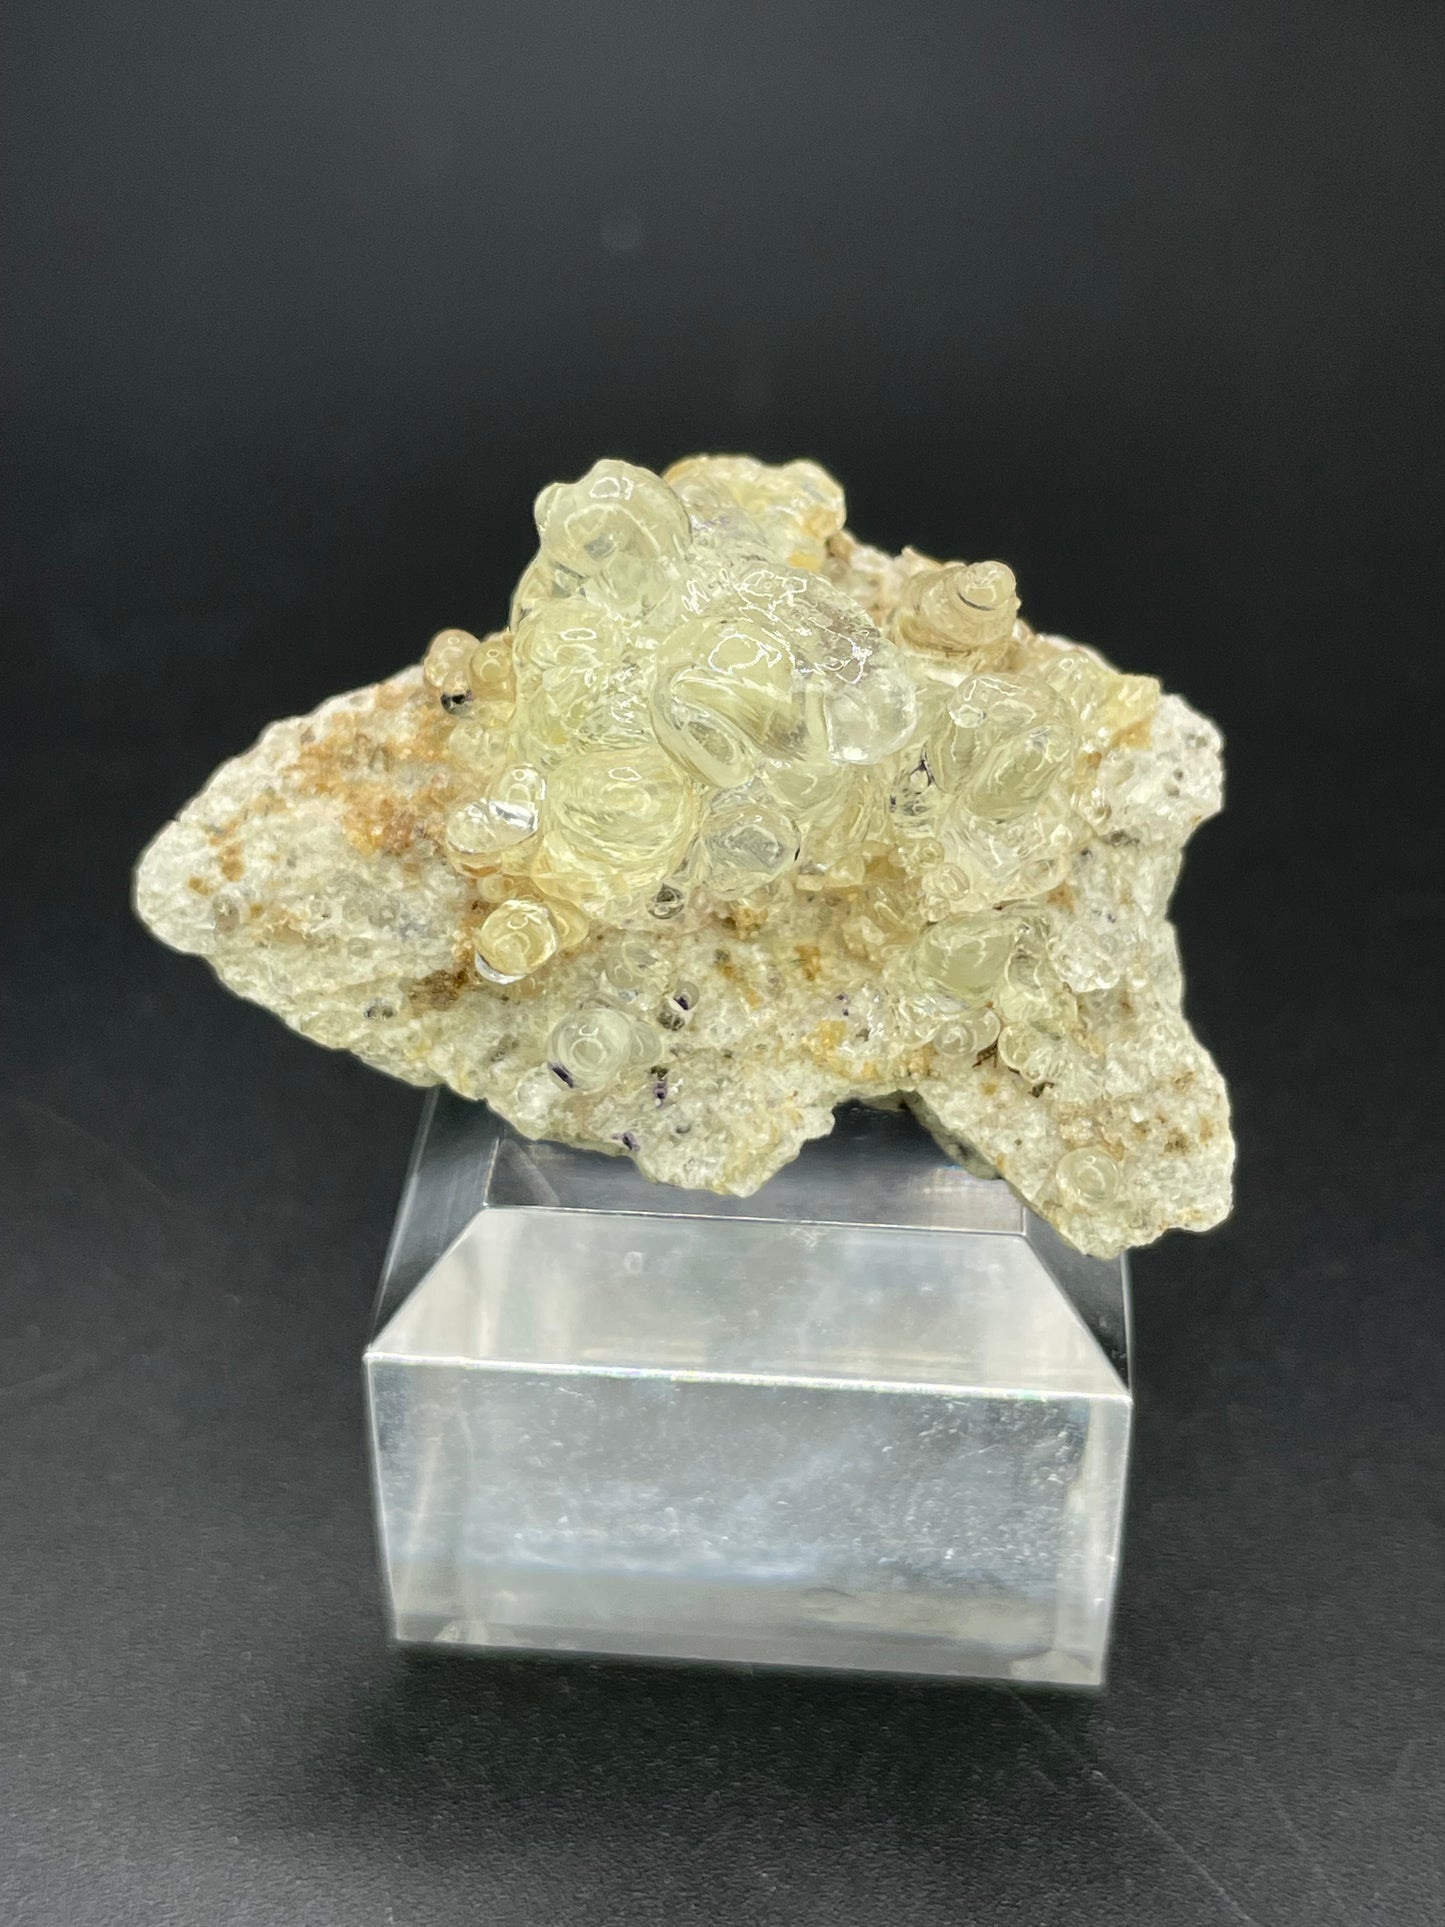 Hyalite Opal with Fluorite Inclusions, Guanajuato, Mexico